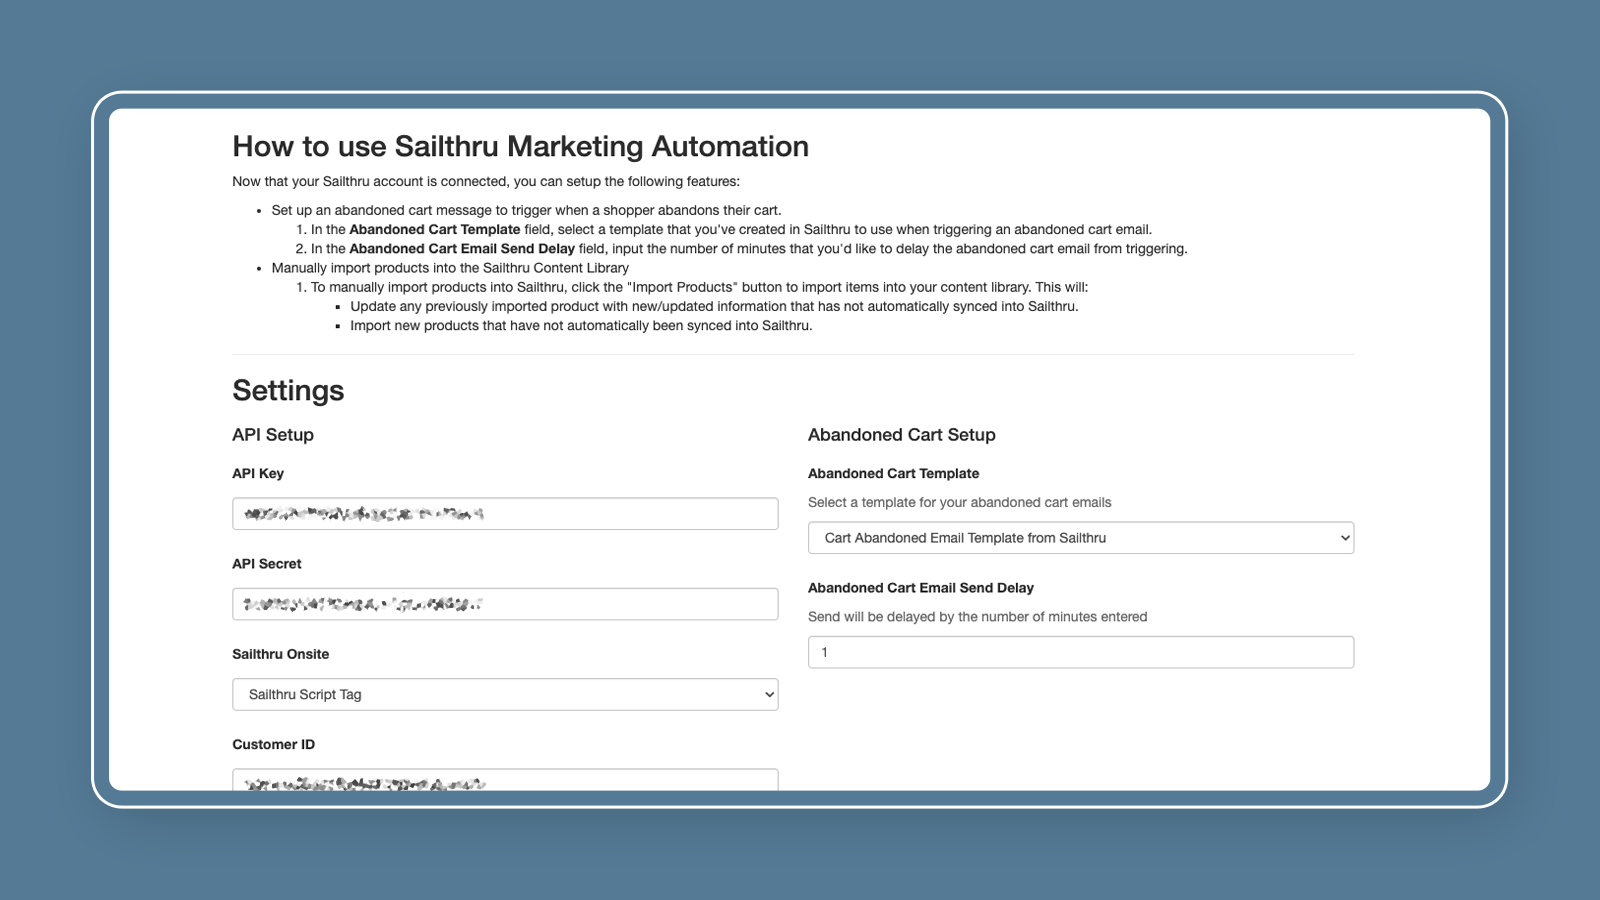 Captura de pantalla de la aplicación Sailthru Marketing Automation.